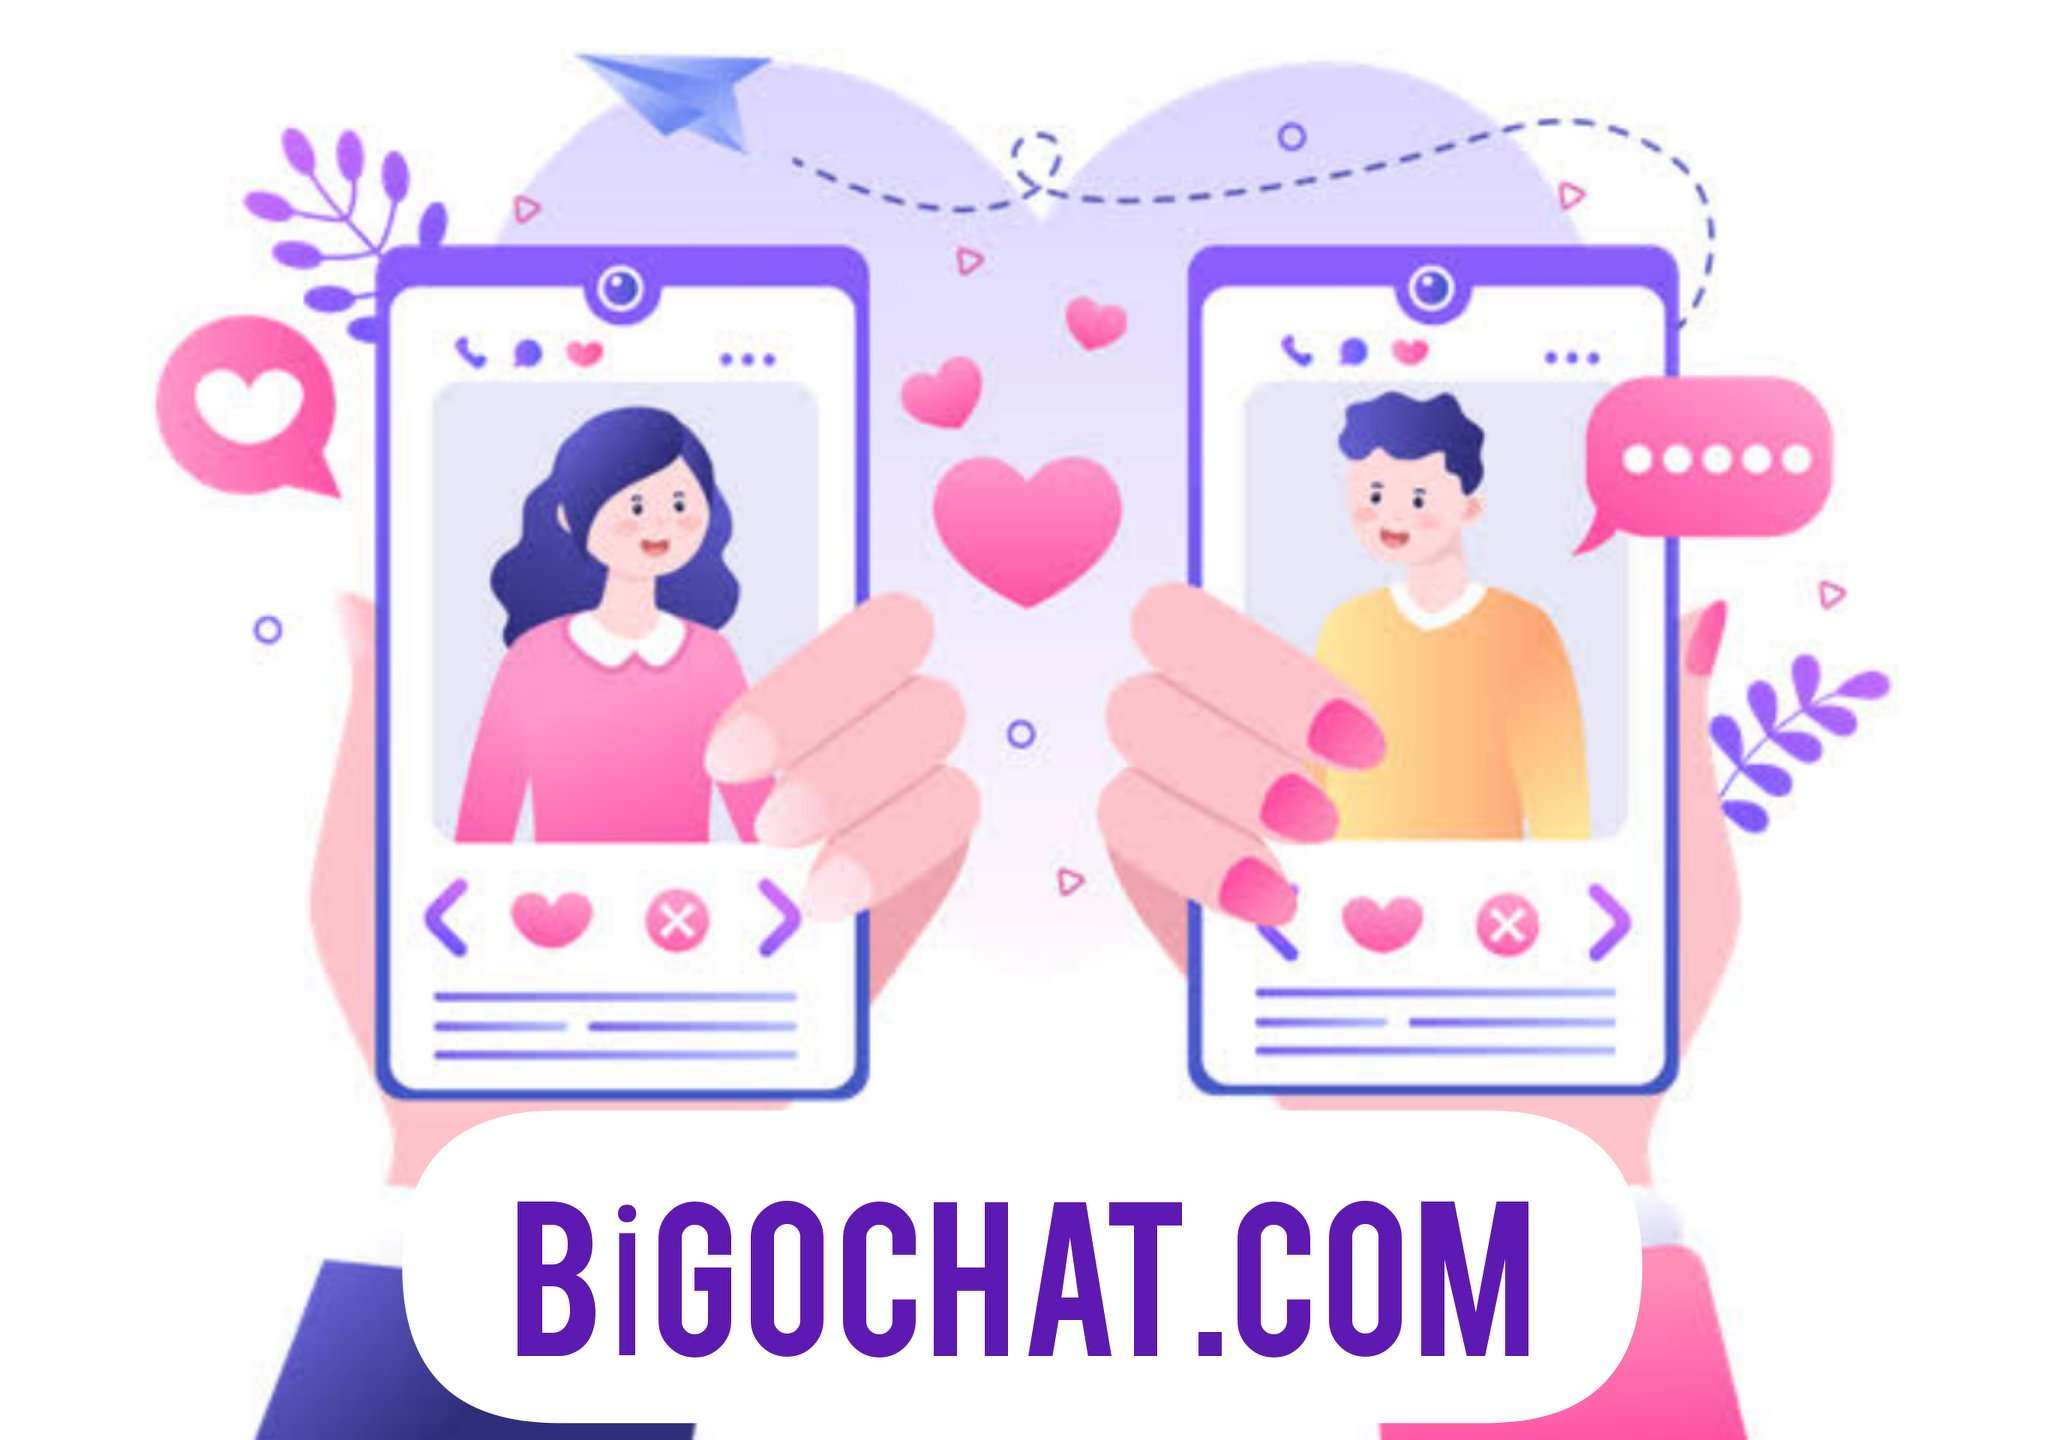 BigoChat